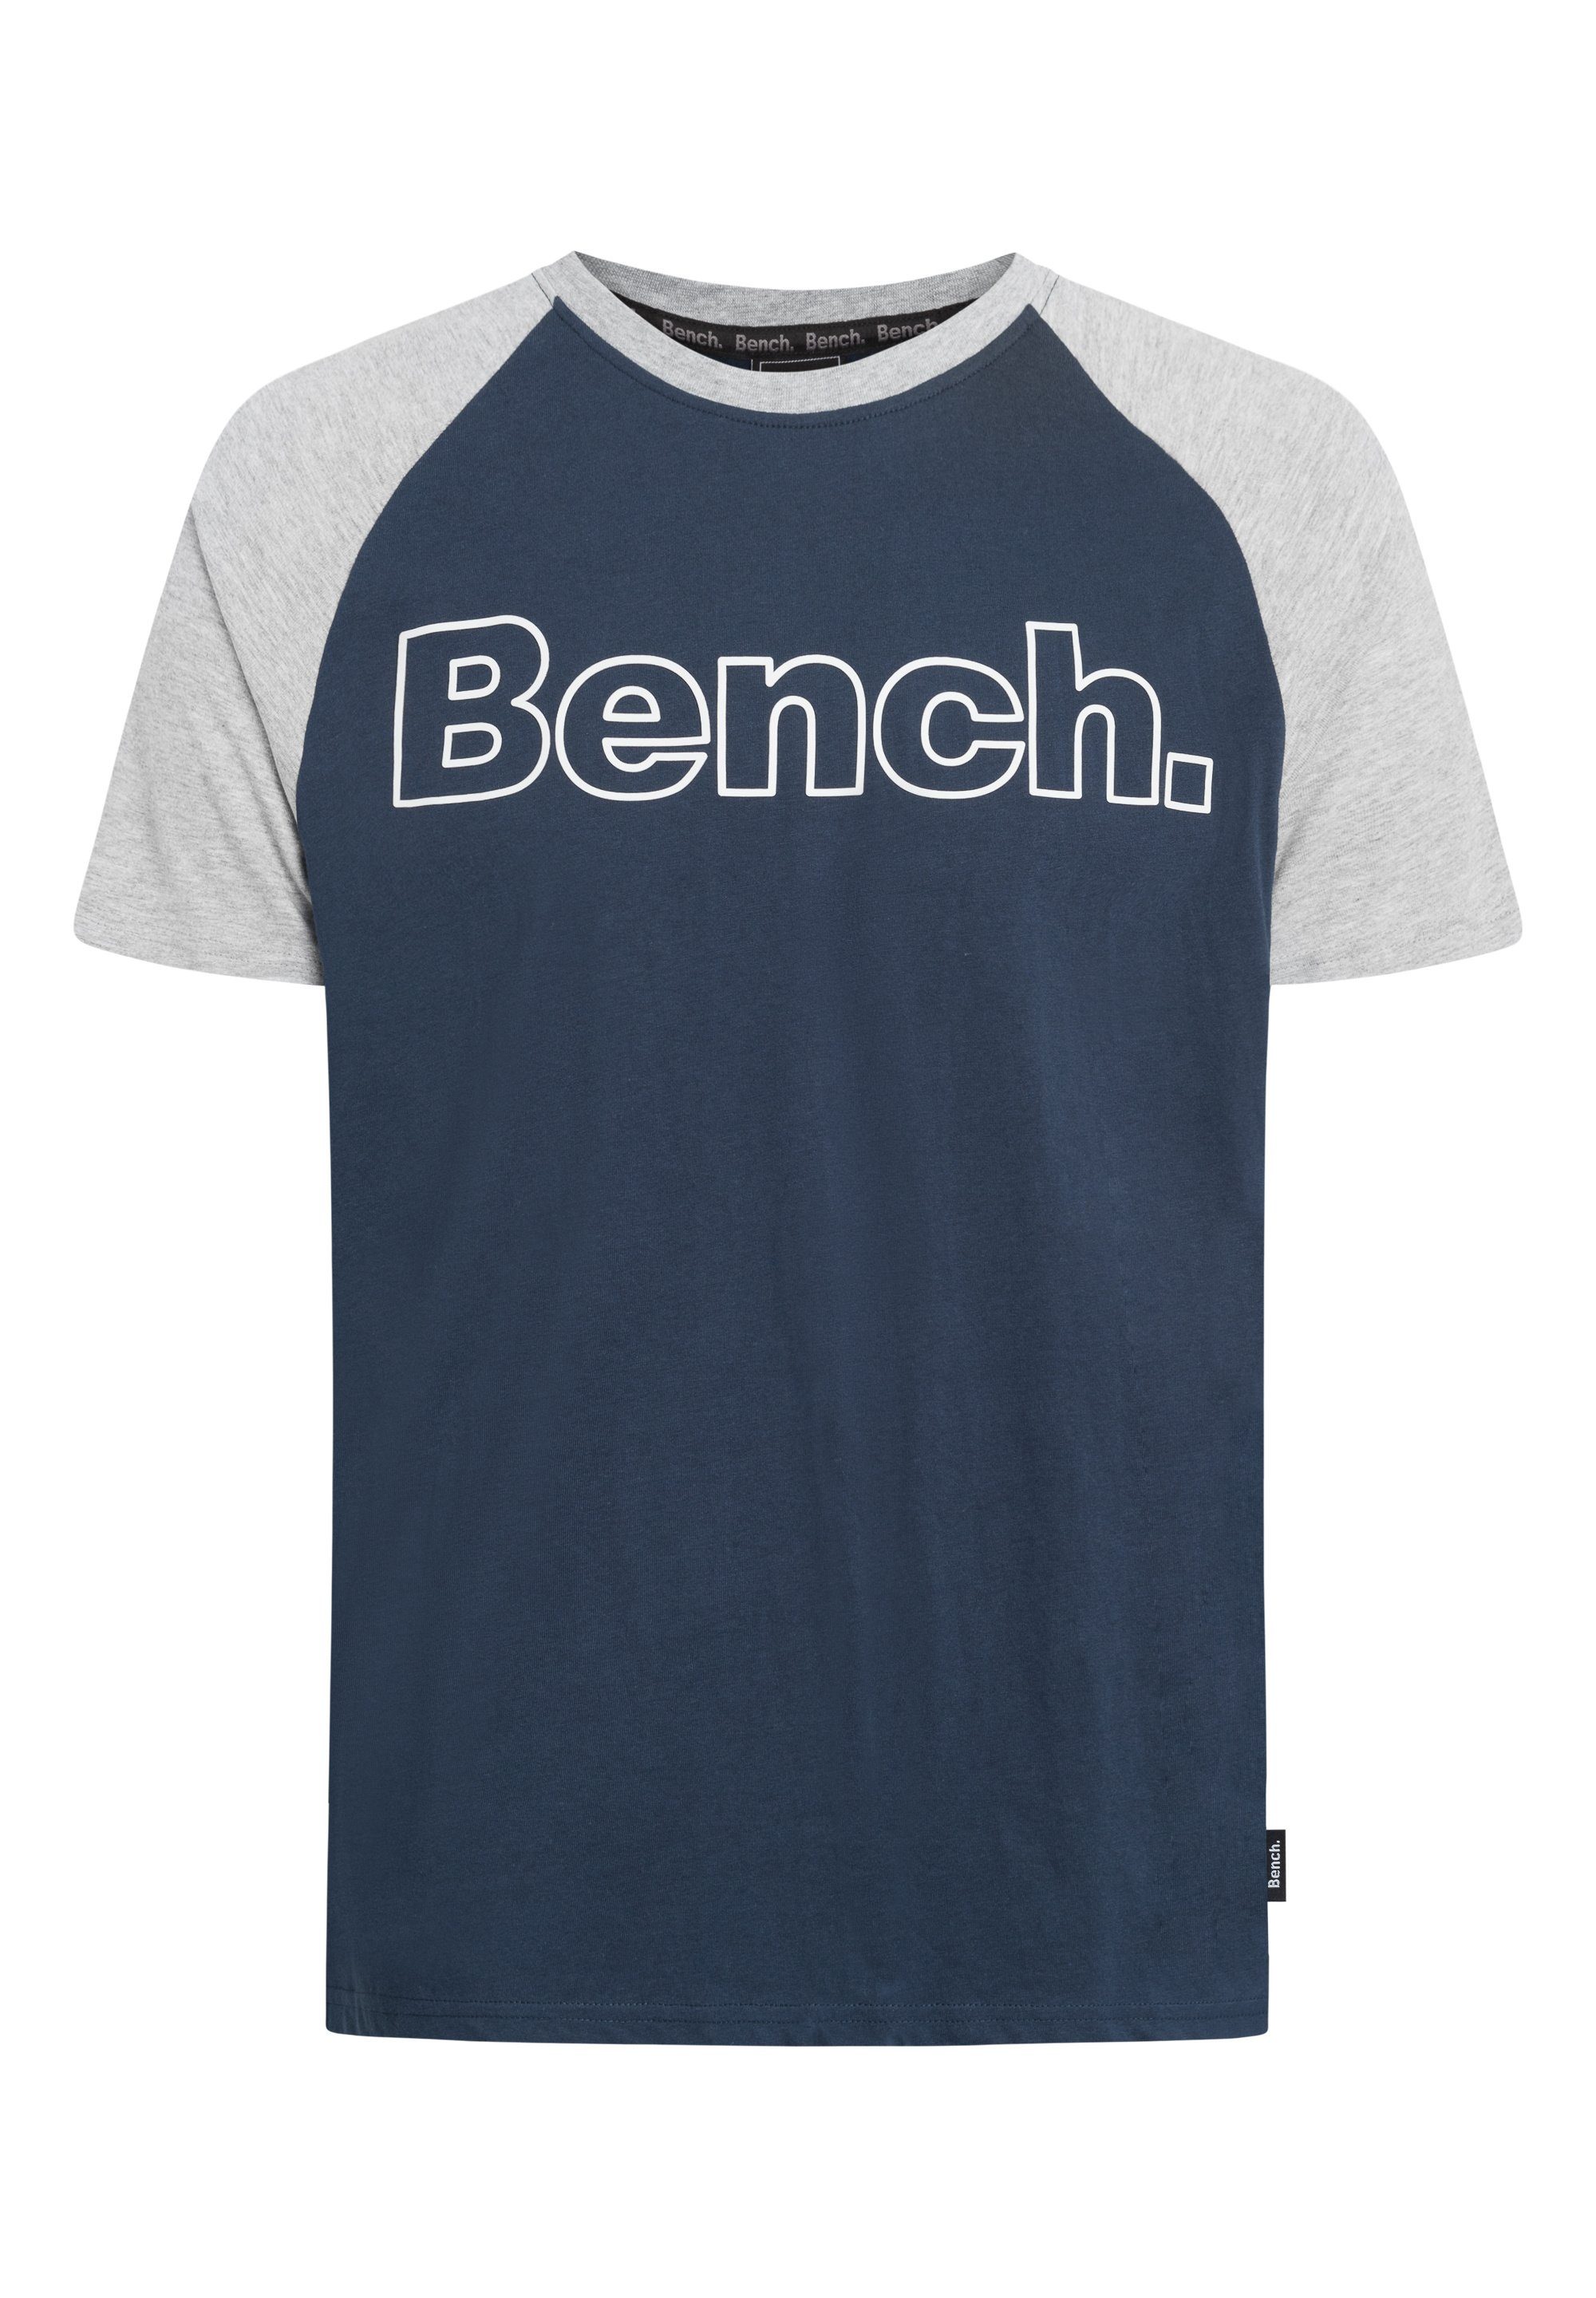 Bench. T-Shirt Rockwell Keine Angabe